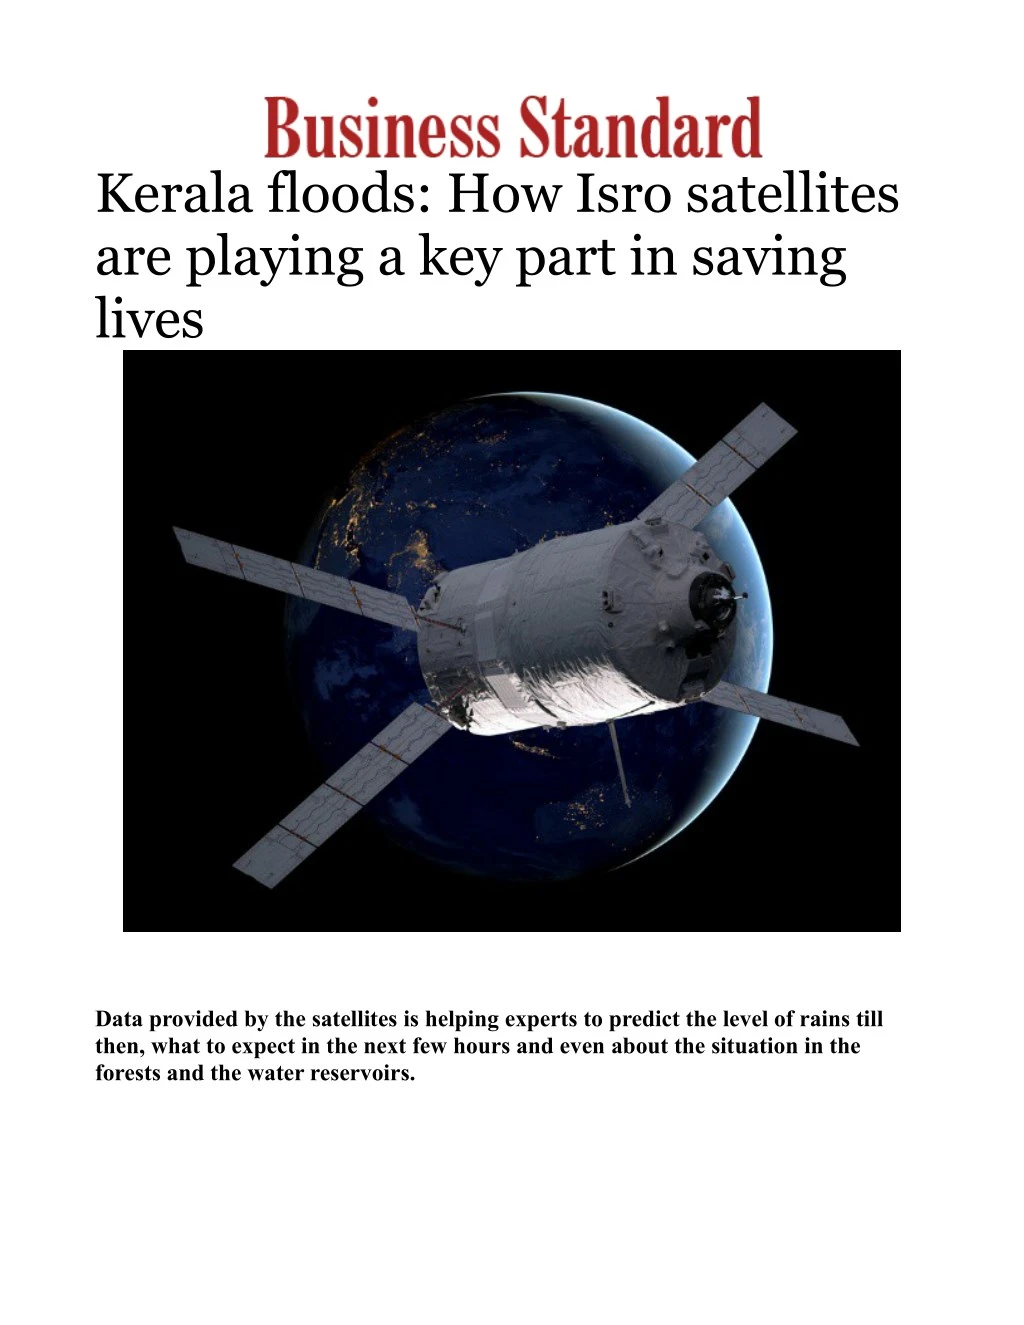 kerala floods how isro satellites are playing